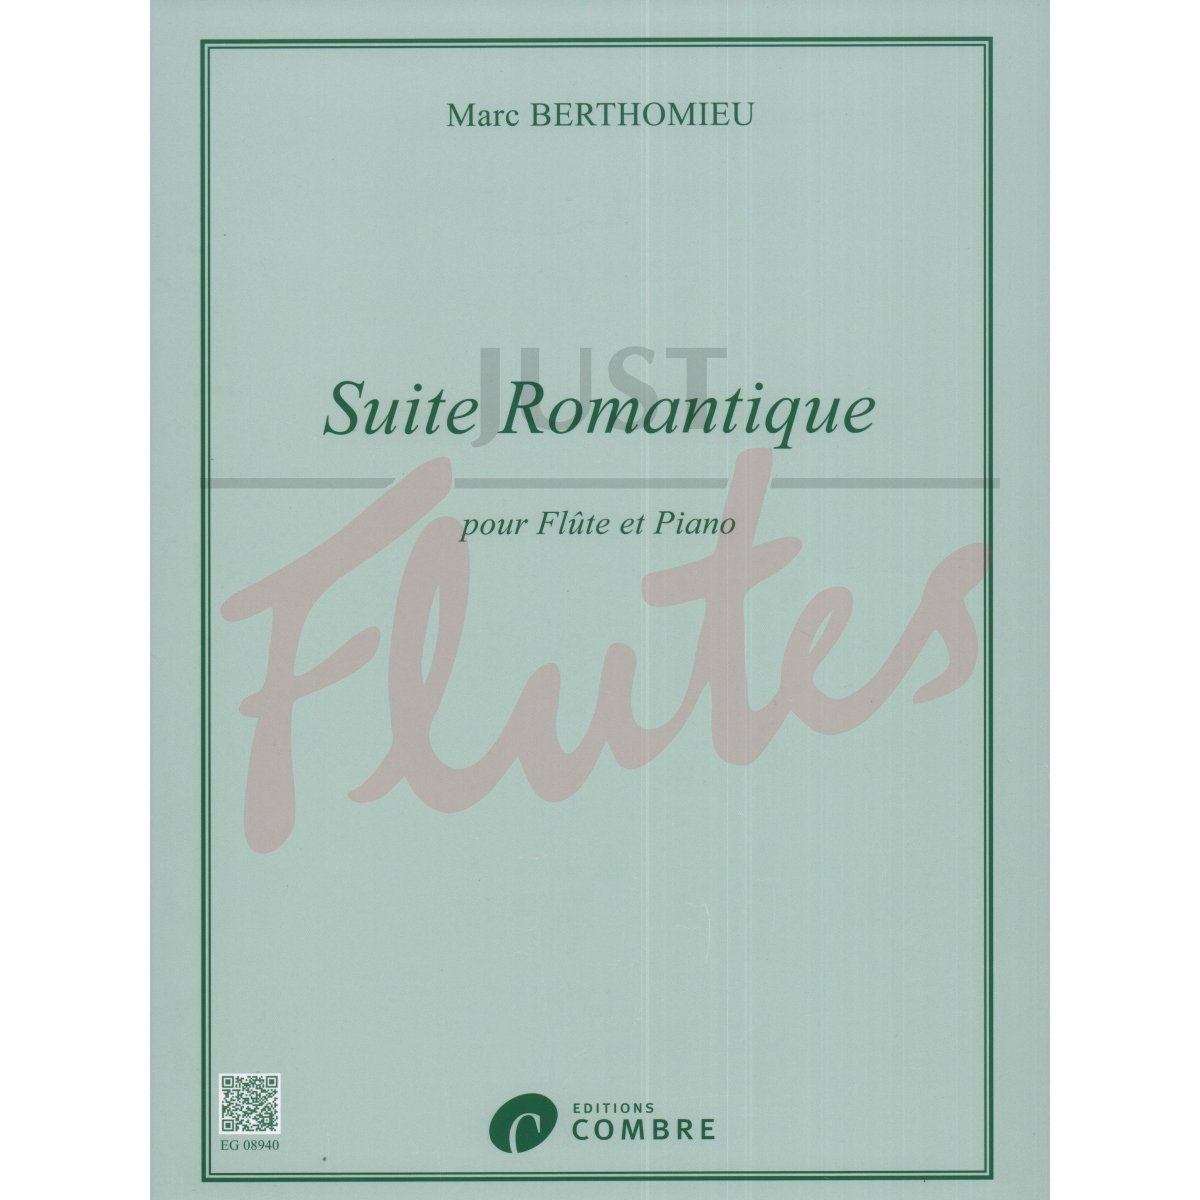 Suite Romantique for Flute and Piano